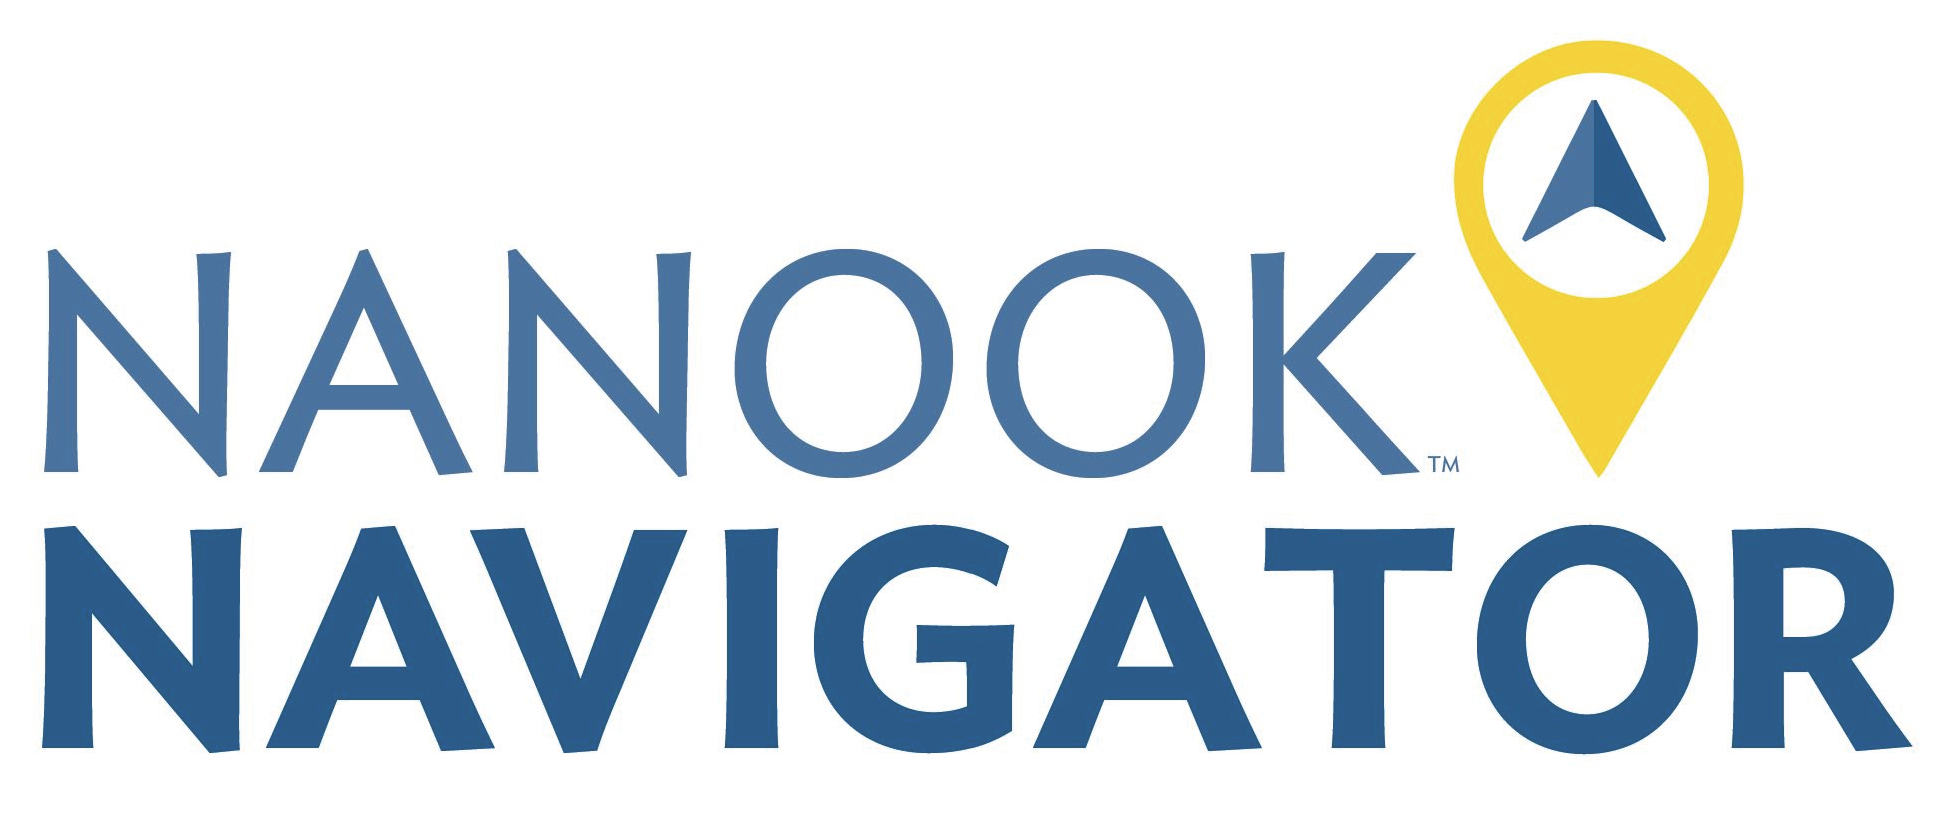 Nanook Navigator logo